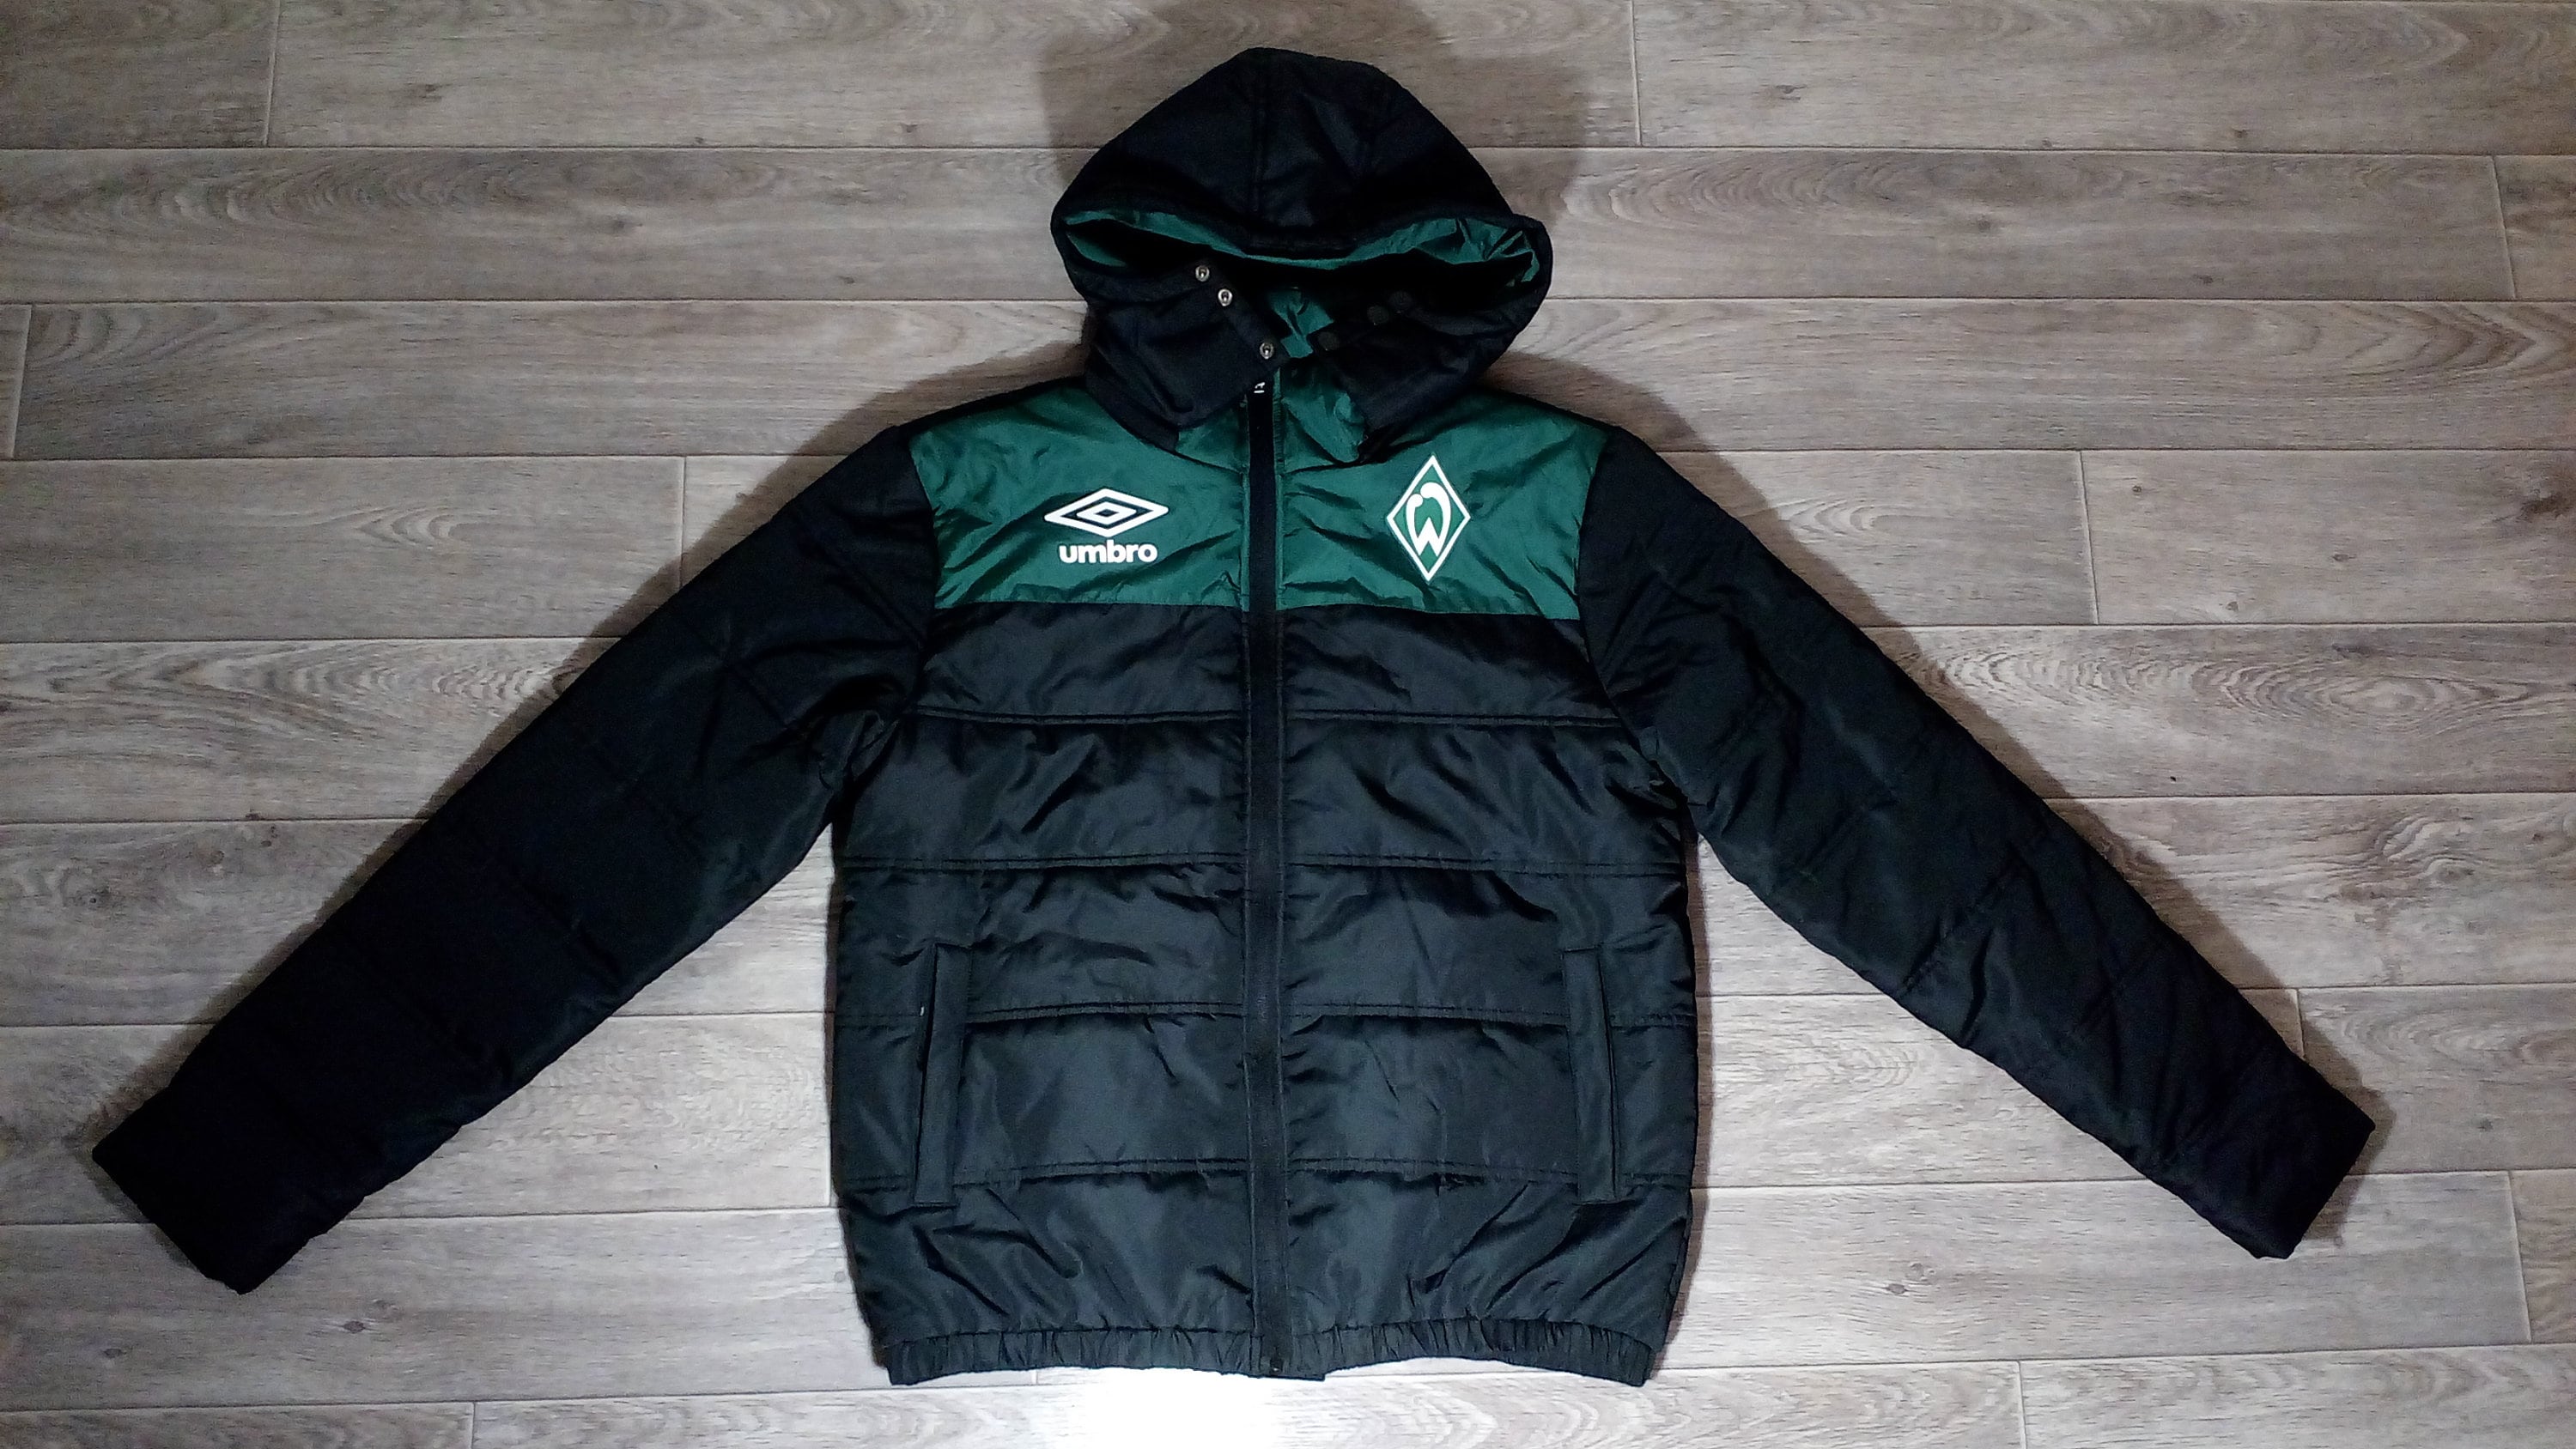 1992/93 Rangers Windbreaker Jacket / Old Adidas Glasgow Soccer